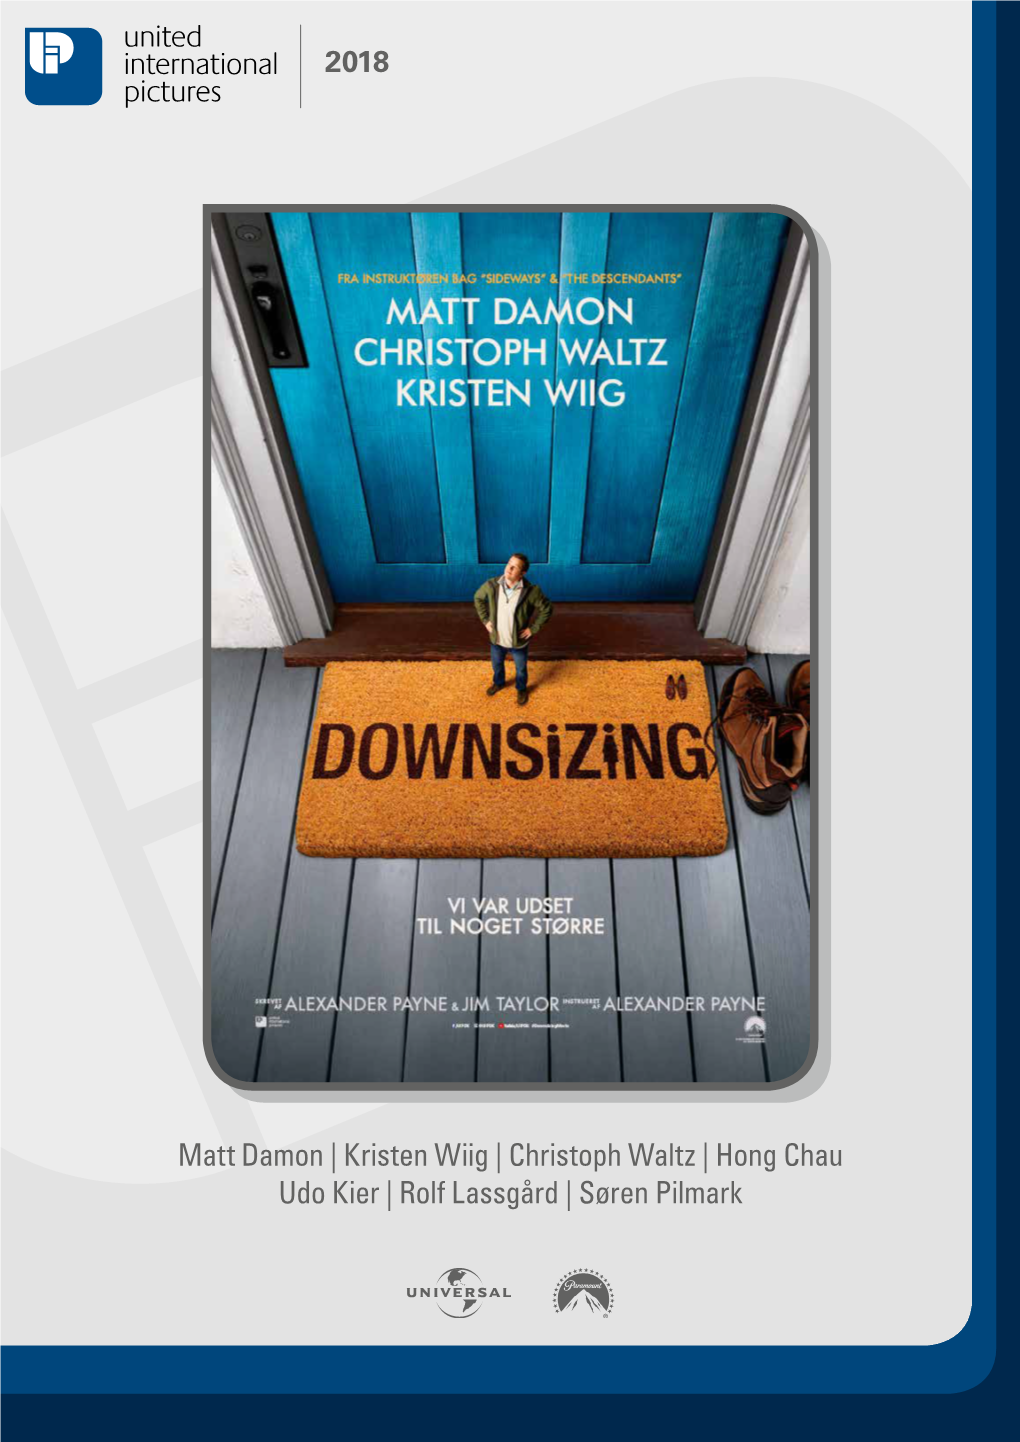 Matt Damon | Kristen Wiig | Christoph Waltz | Hong Chau Udo Kier | Rolf Lassgård | Søren Pilmark